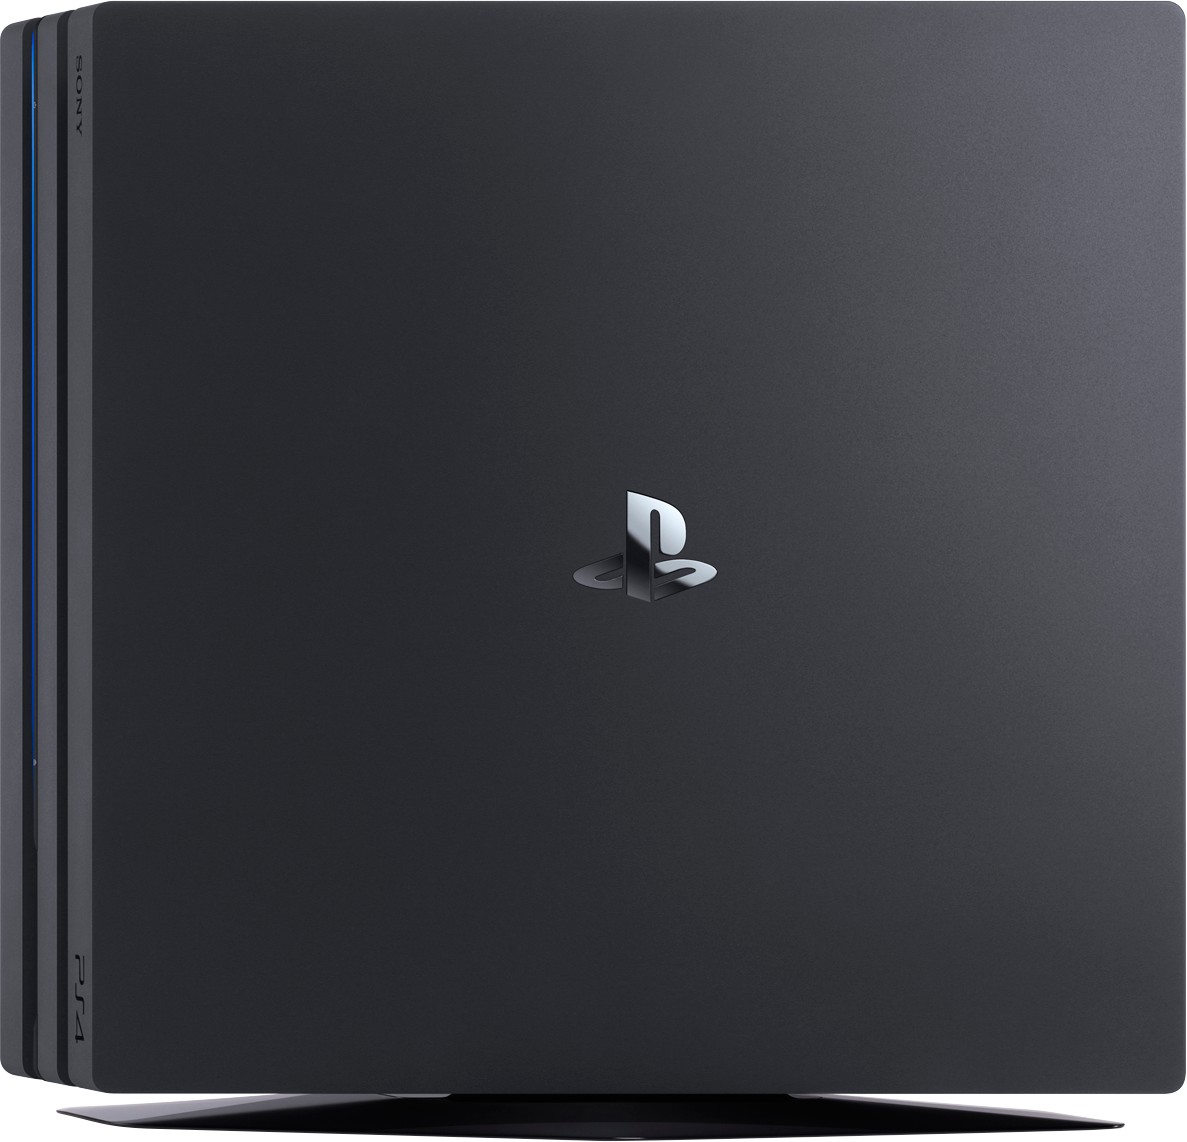 PlayStation 4 Pro (1TB, Jet Black) + Подставка